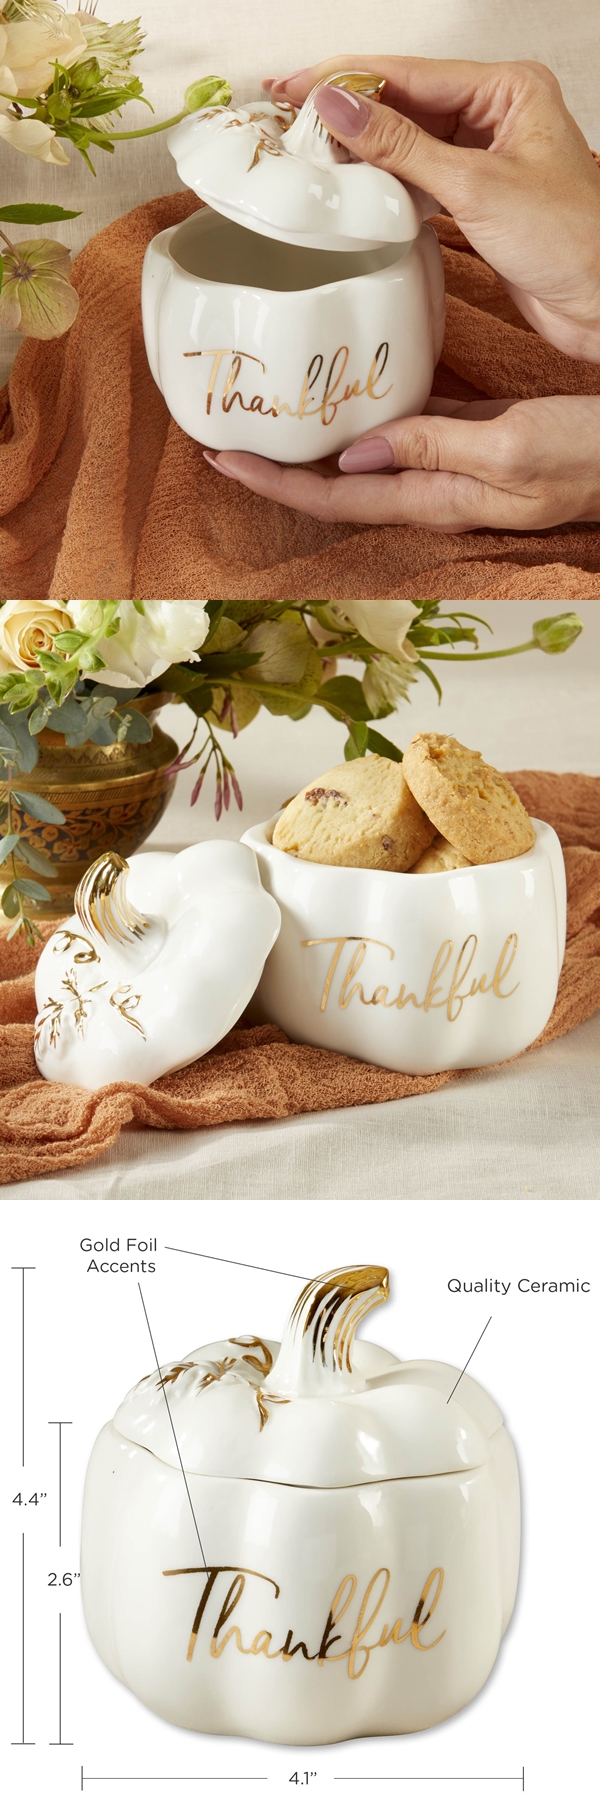 Kate Aspen "Thankful" White Pumpkin Decorative Ceramic Bowl